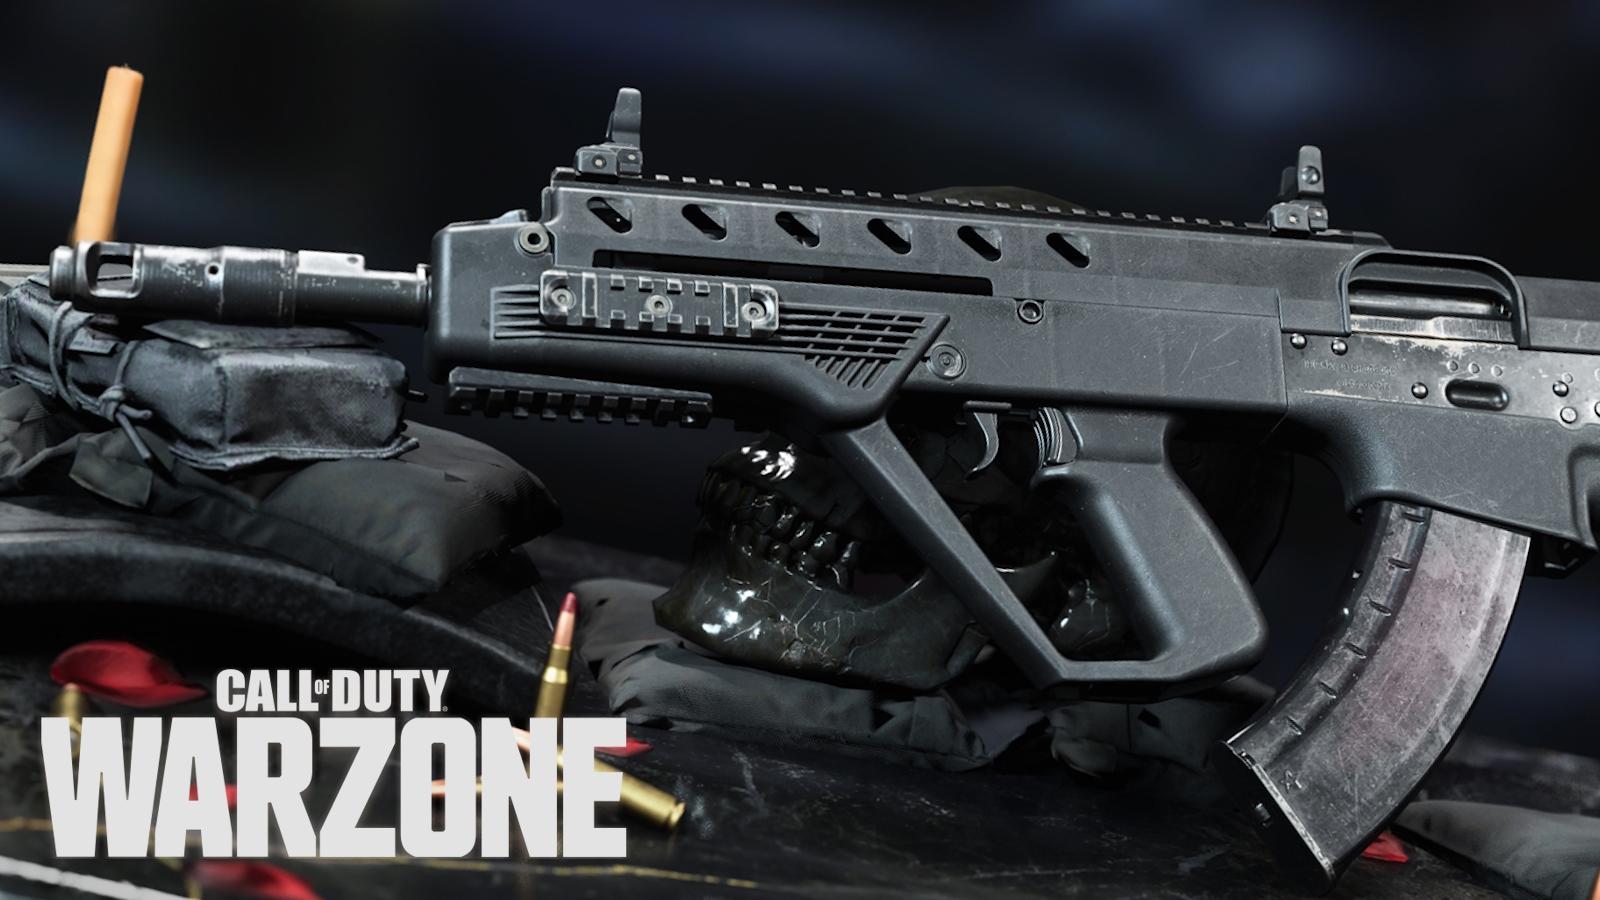 RAM-7 assault rifle with Warzone logo.